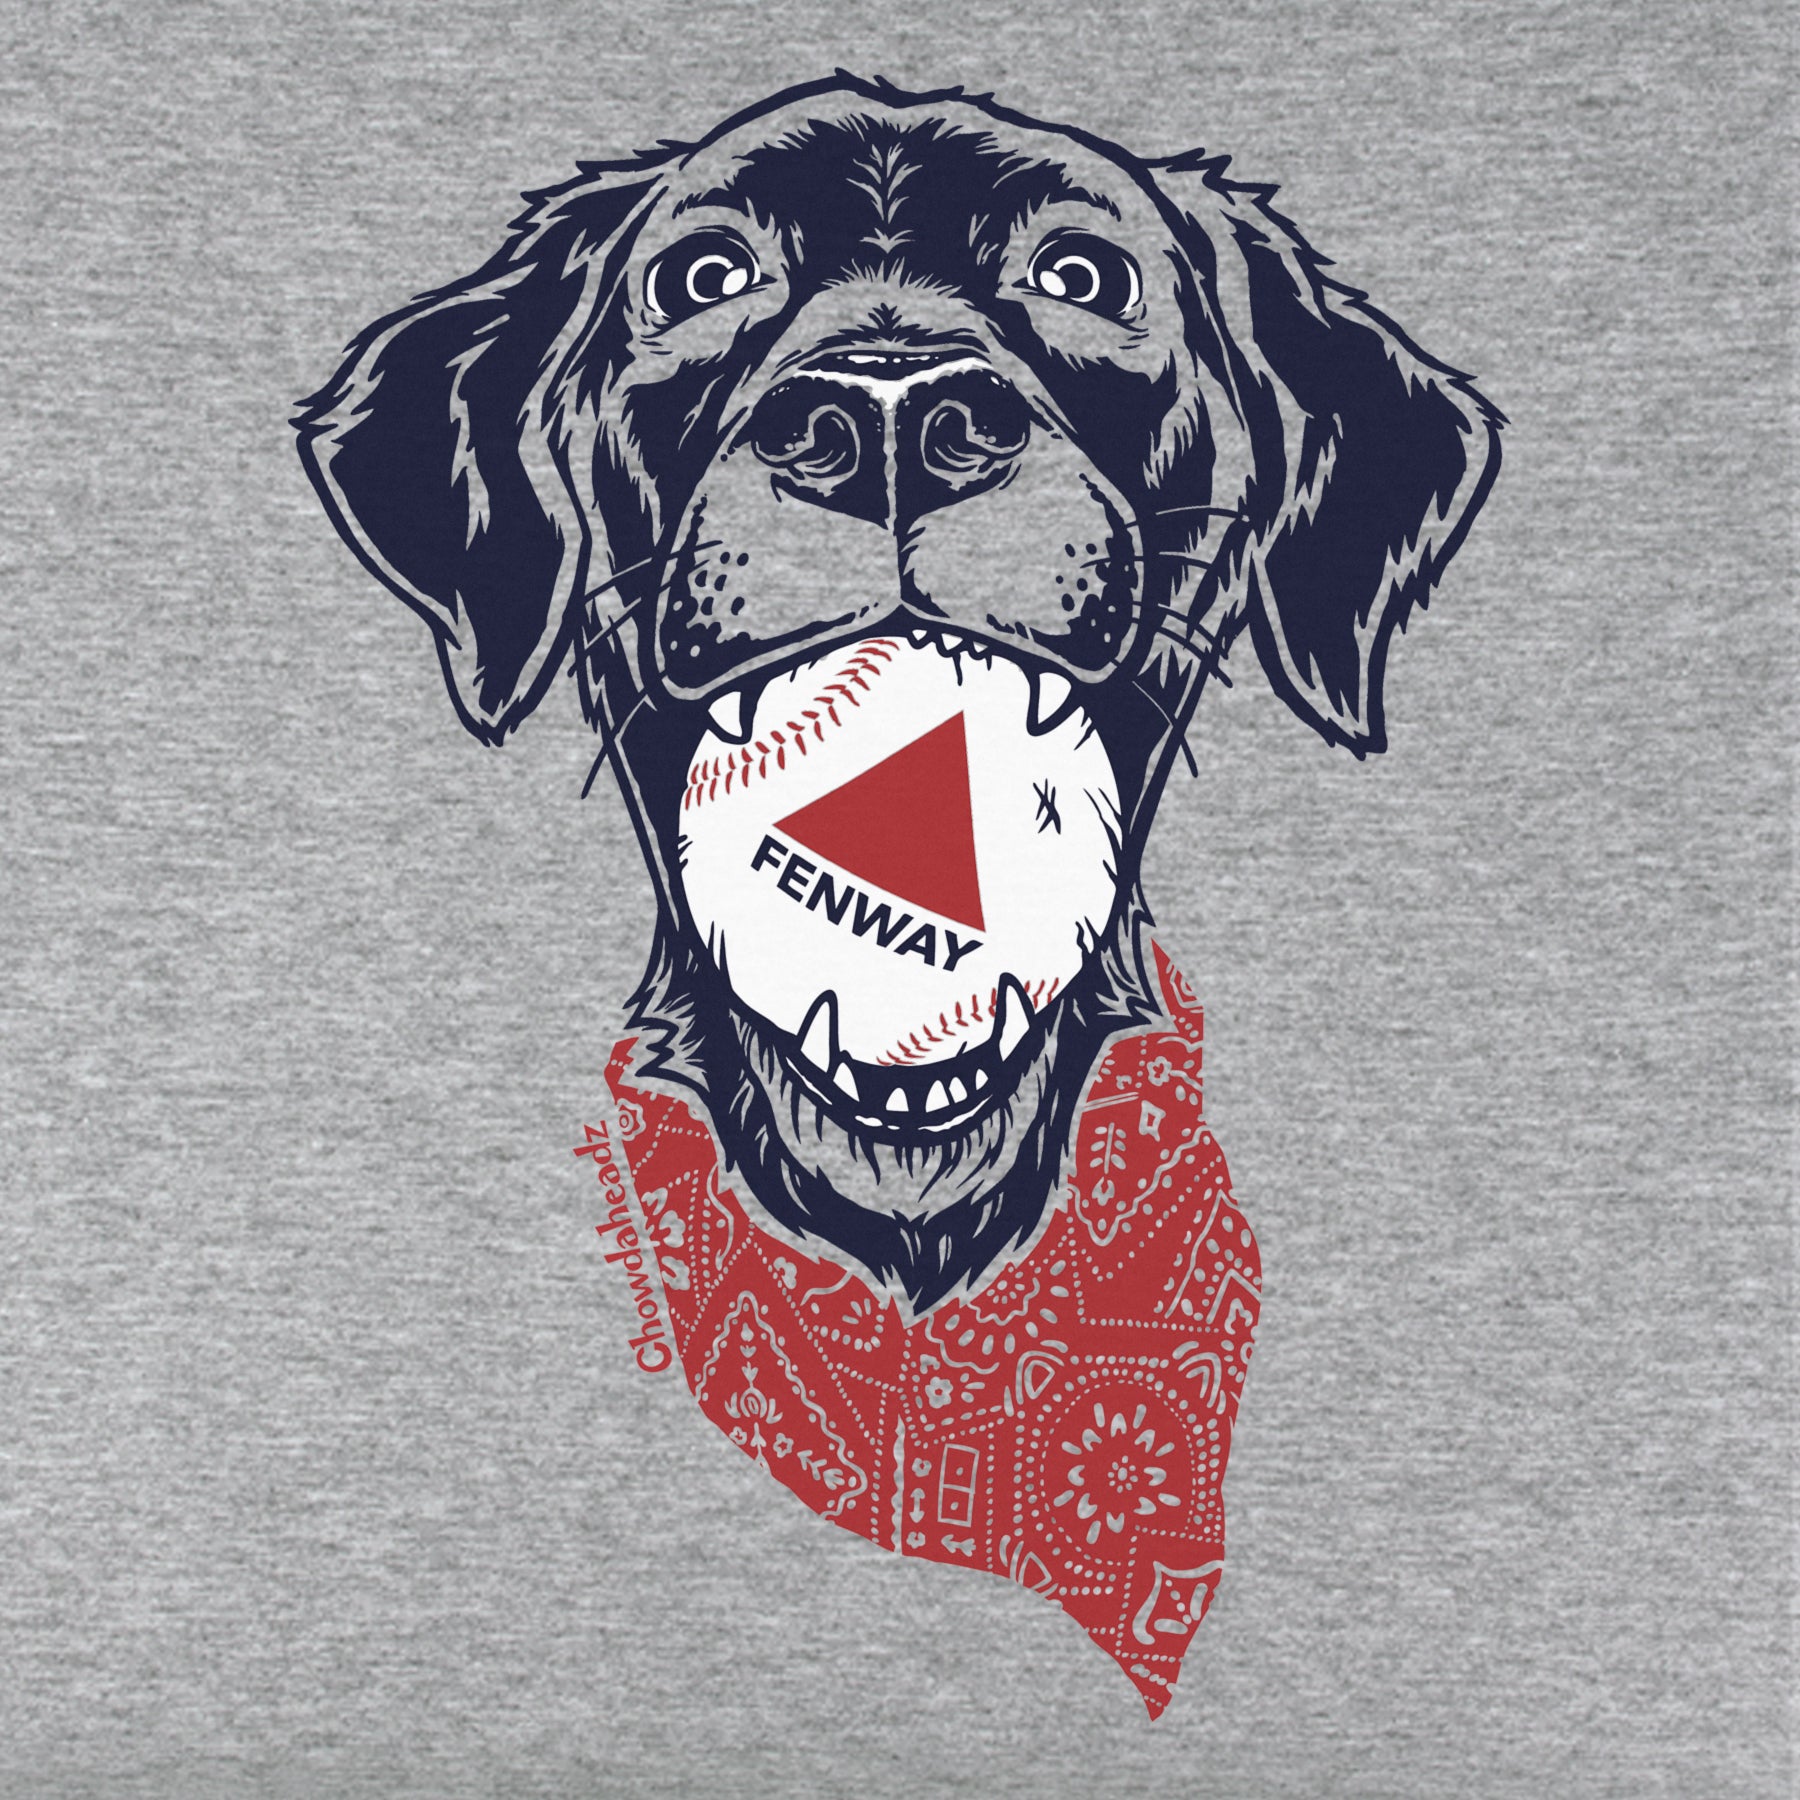 Fenway Dog Youth T-Shirt - Chowdaheadz